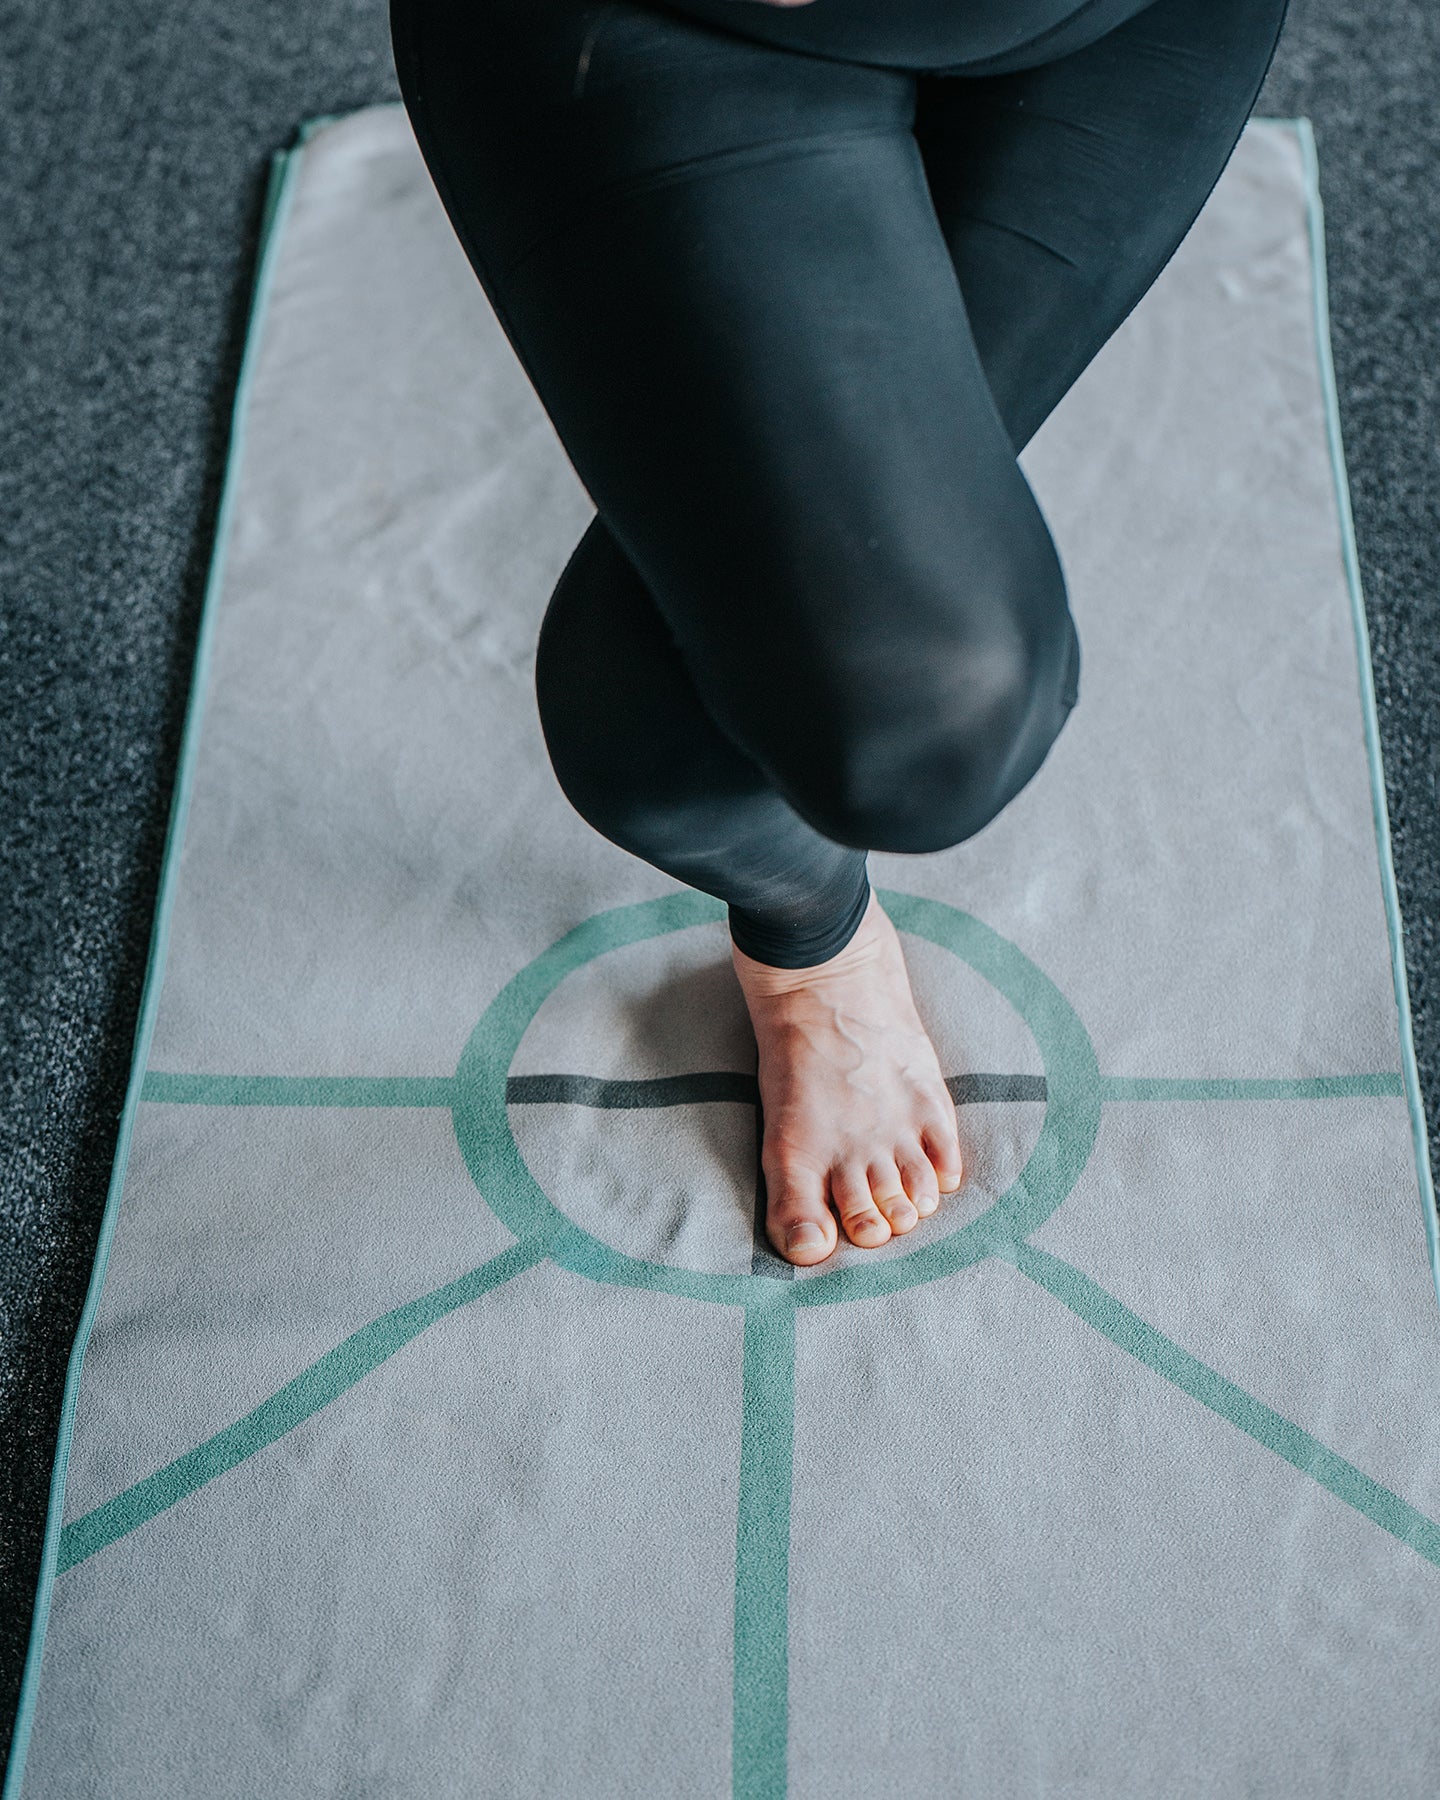 How To Heal Back Pain With Bikram Yoga